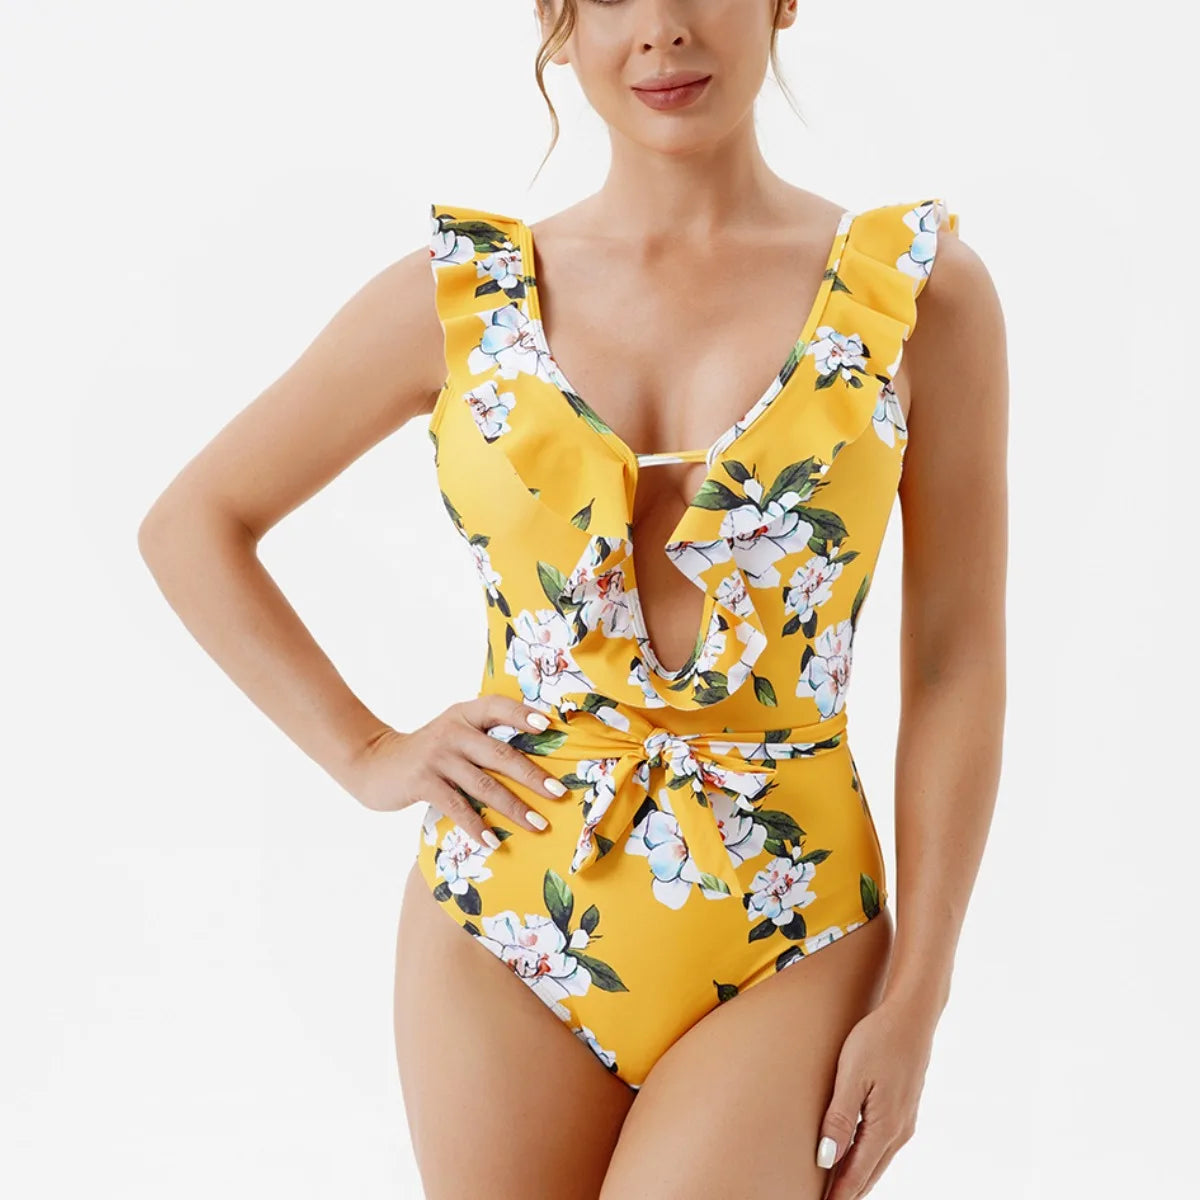 New Brazilian One Piece Brand Yellow Swimsuit